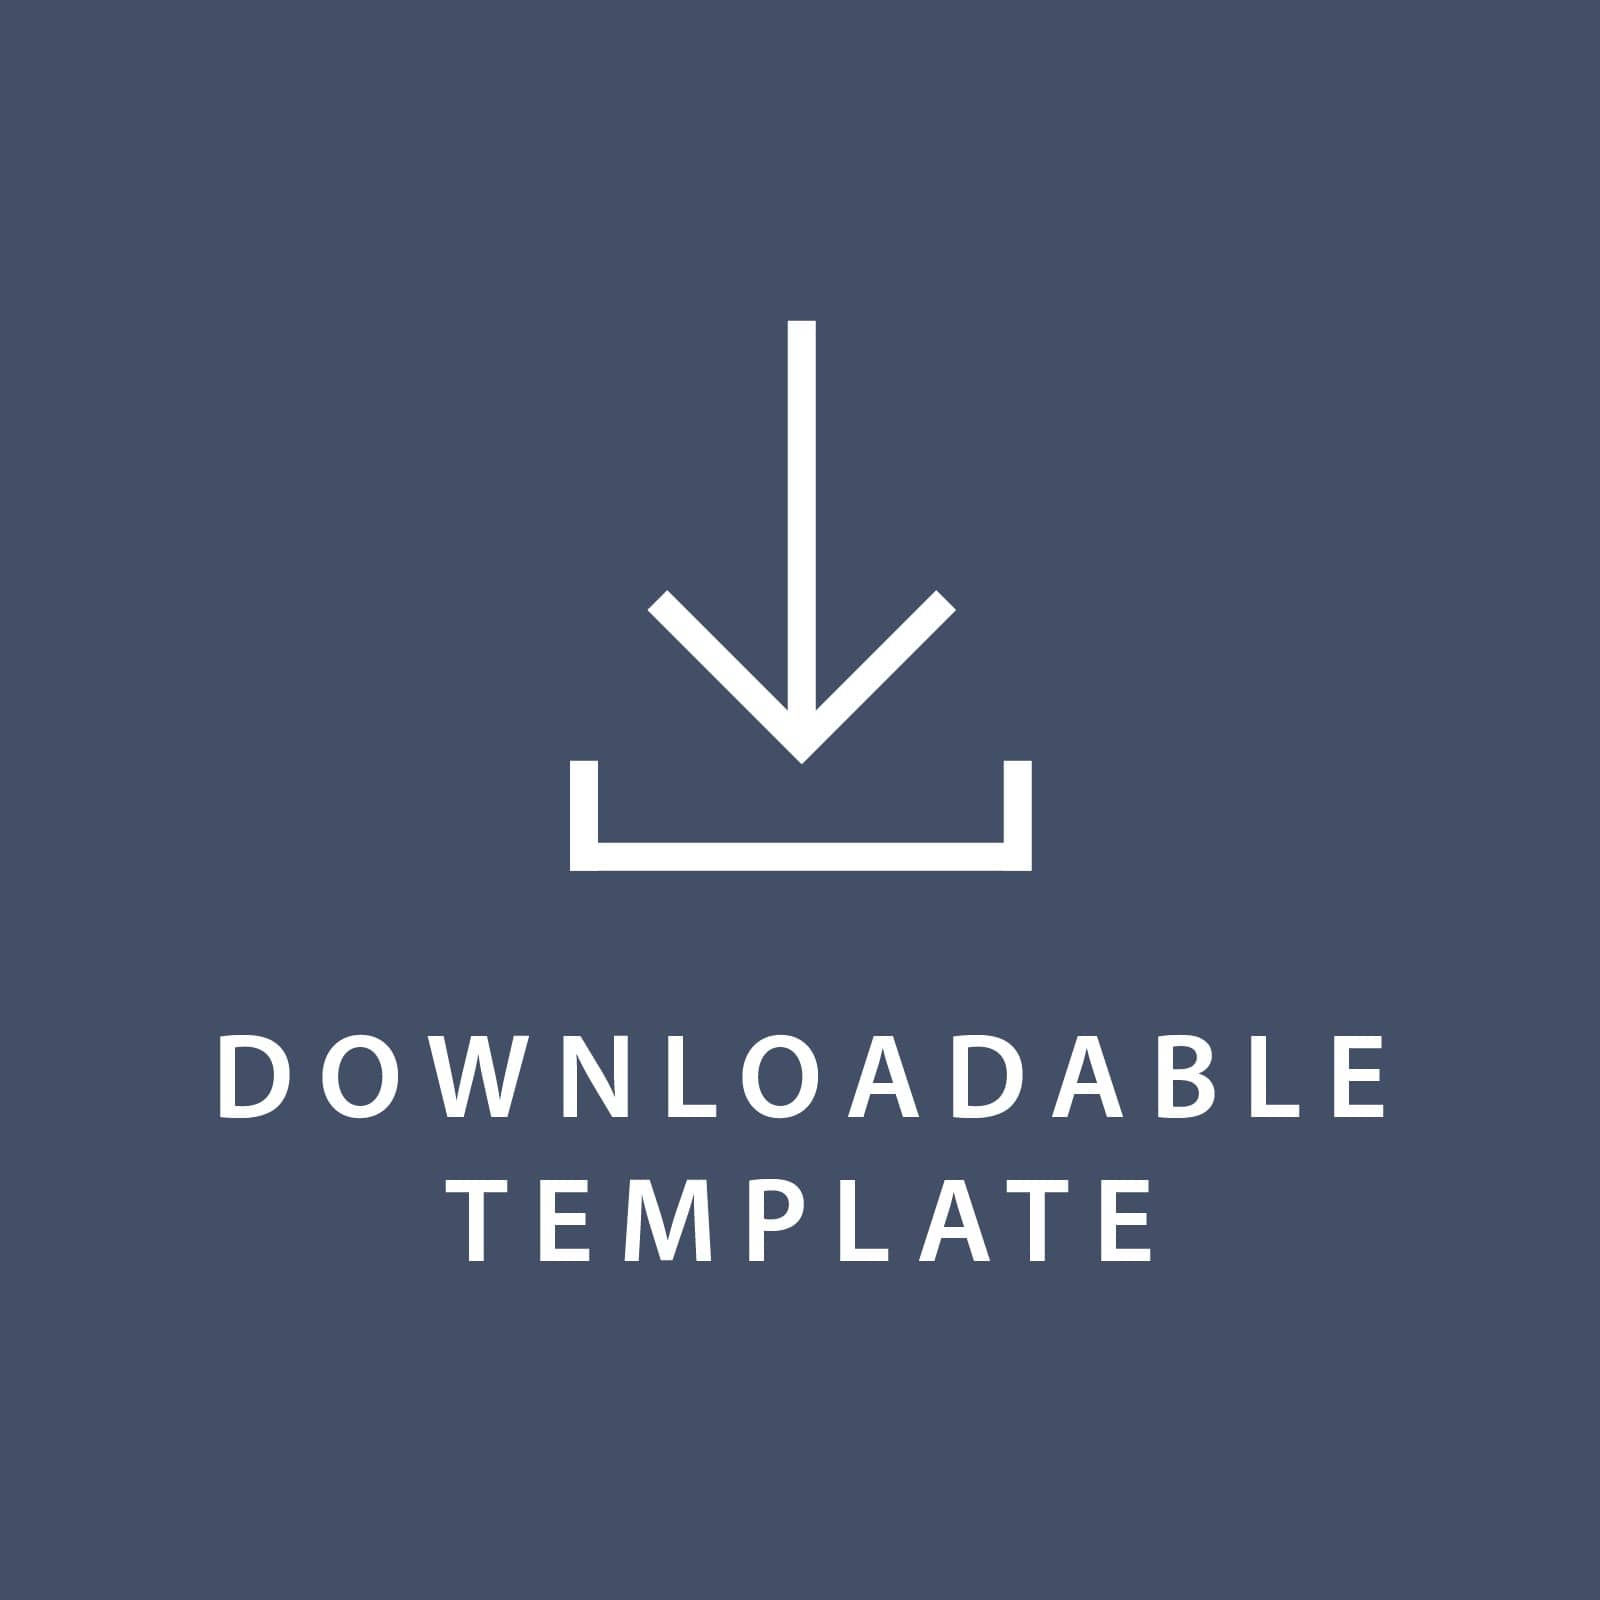 Template for 11 x 8.5 Certificates Gartner Studios Template tmplt0861